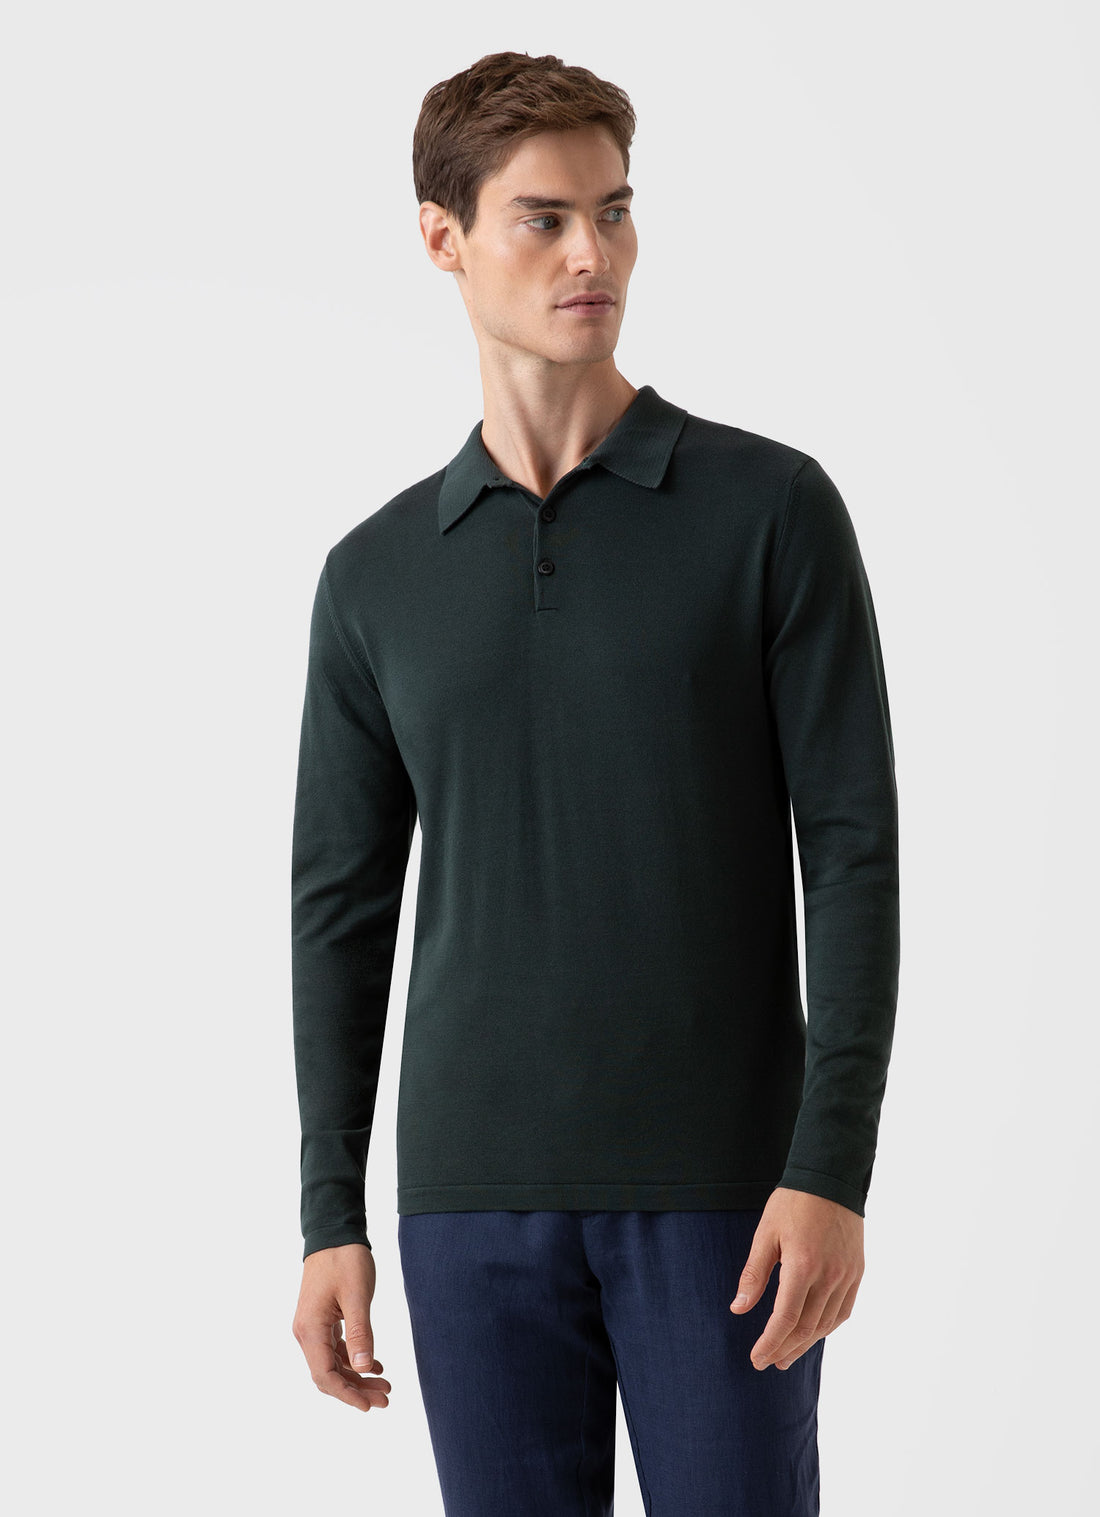 Men's Sea Island Cotton Long Sleeve Polo Shirt in Seaweed